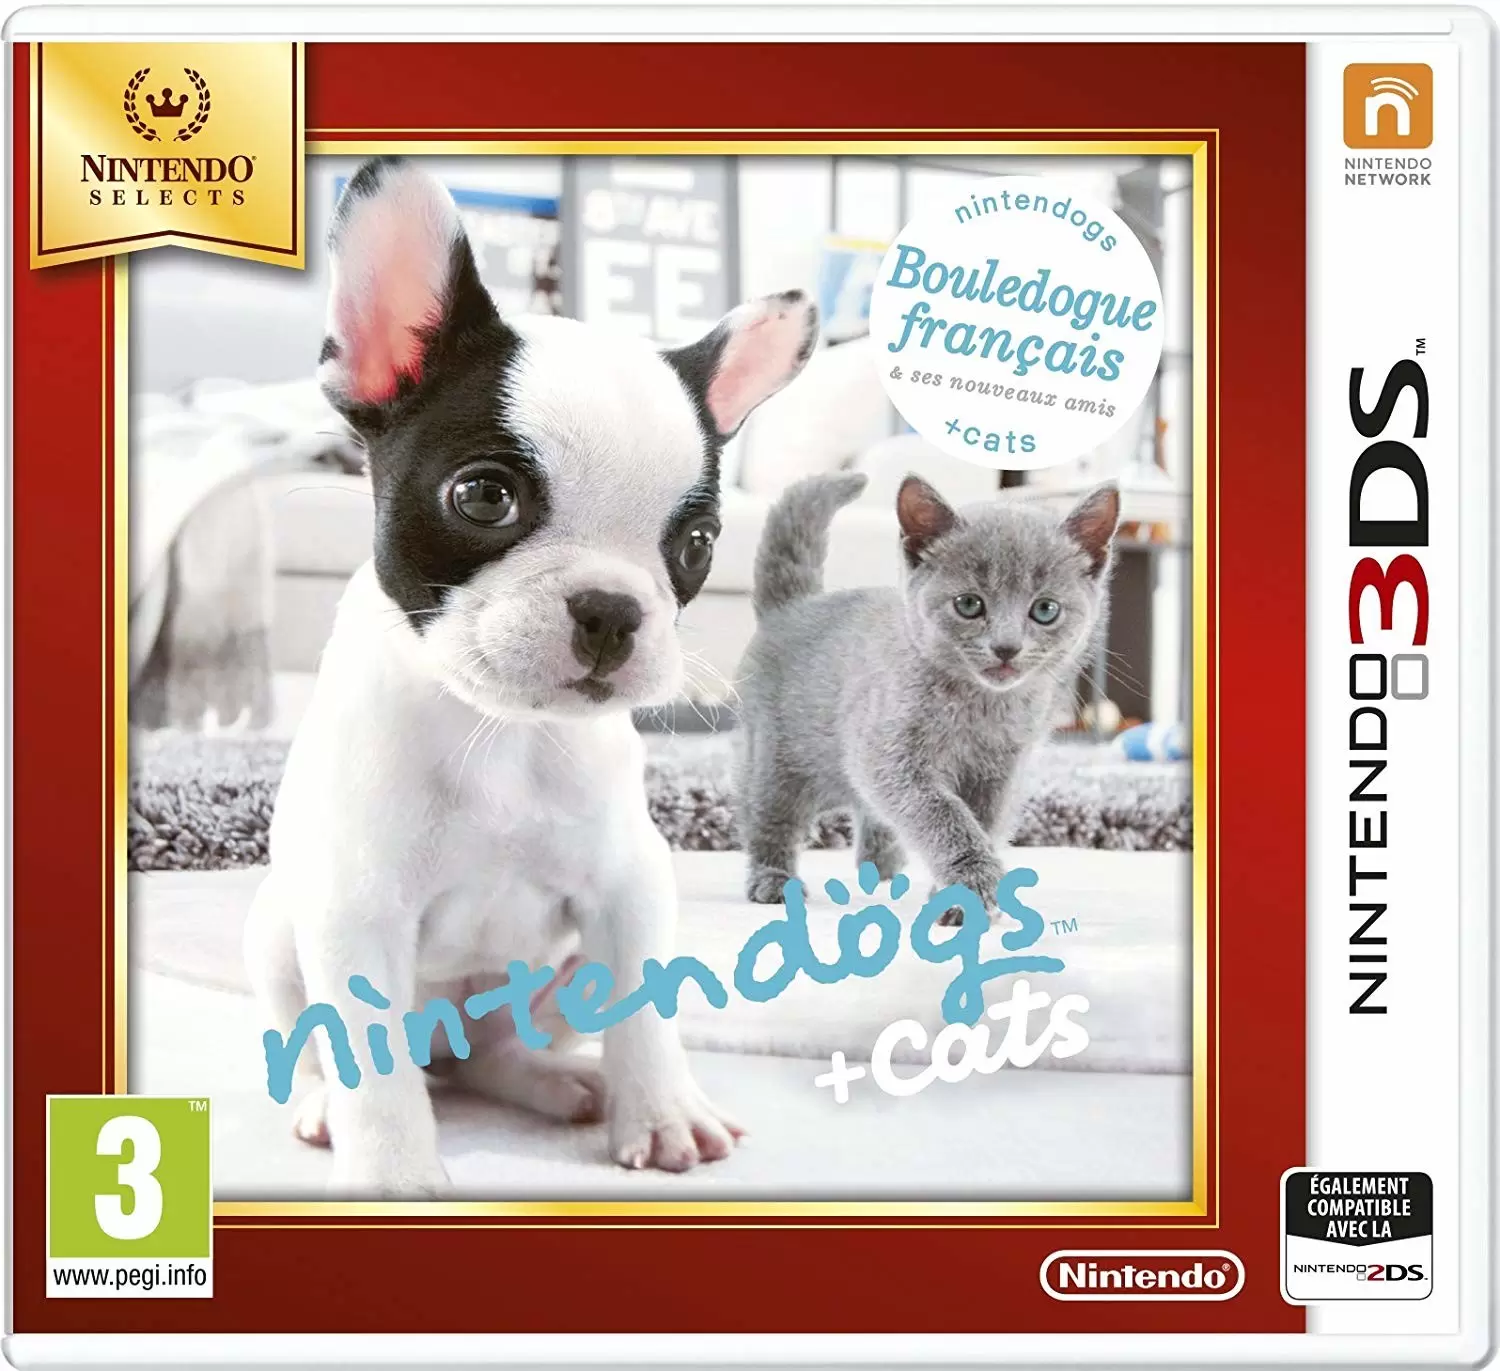 Nintendo 2DS / 3DS Games - Nintendogs + Cats Bouledogue (Nintendo Selects)